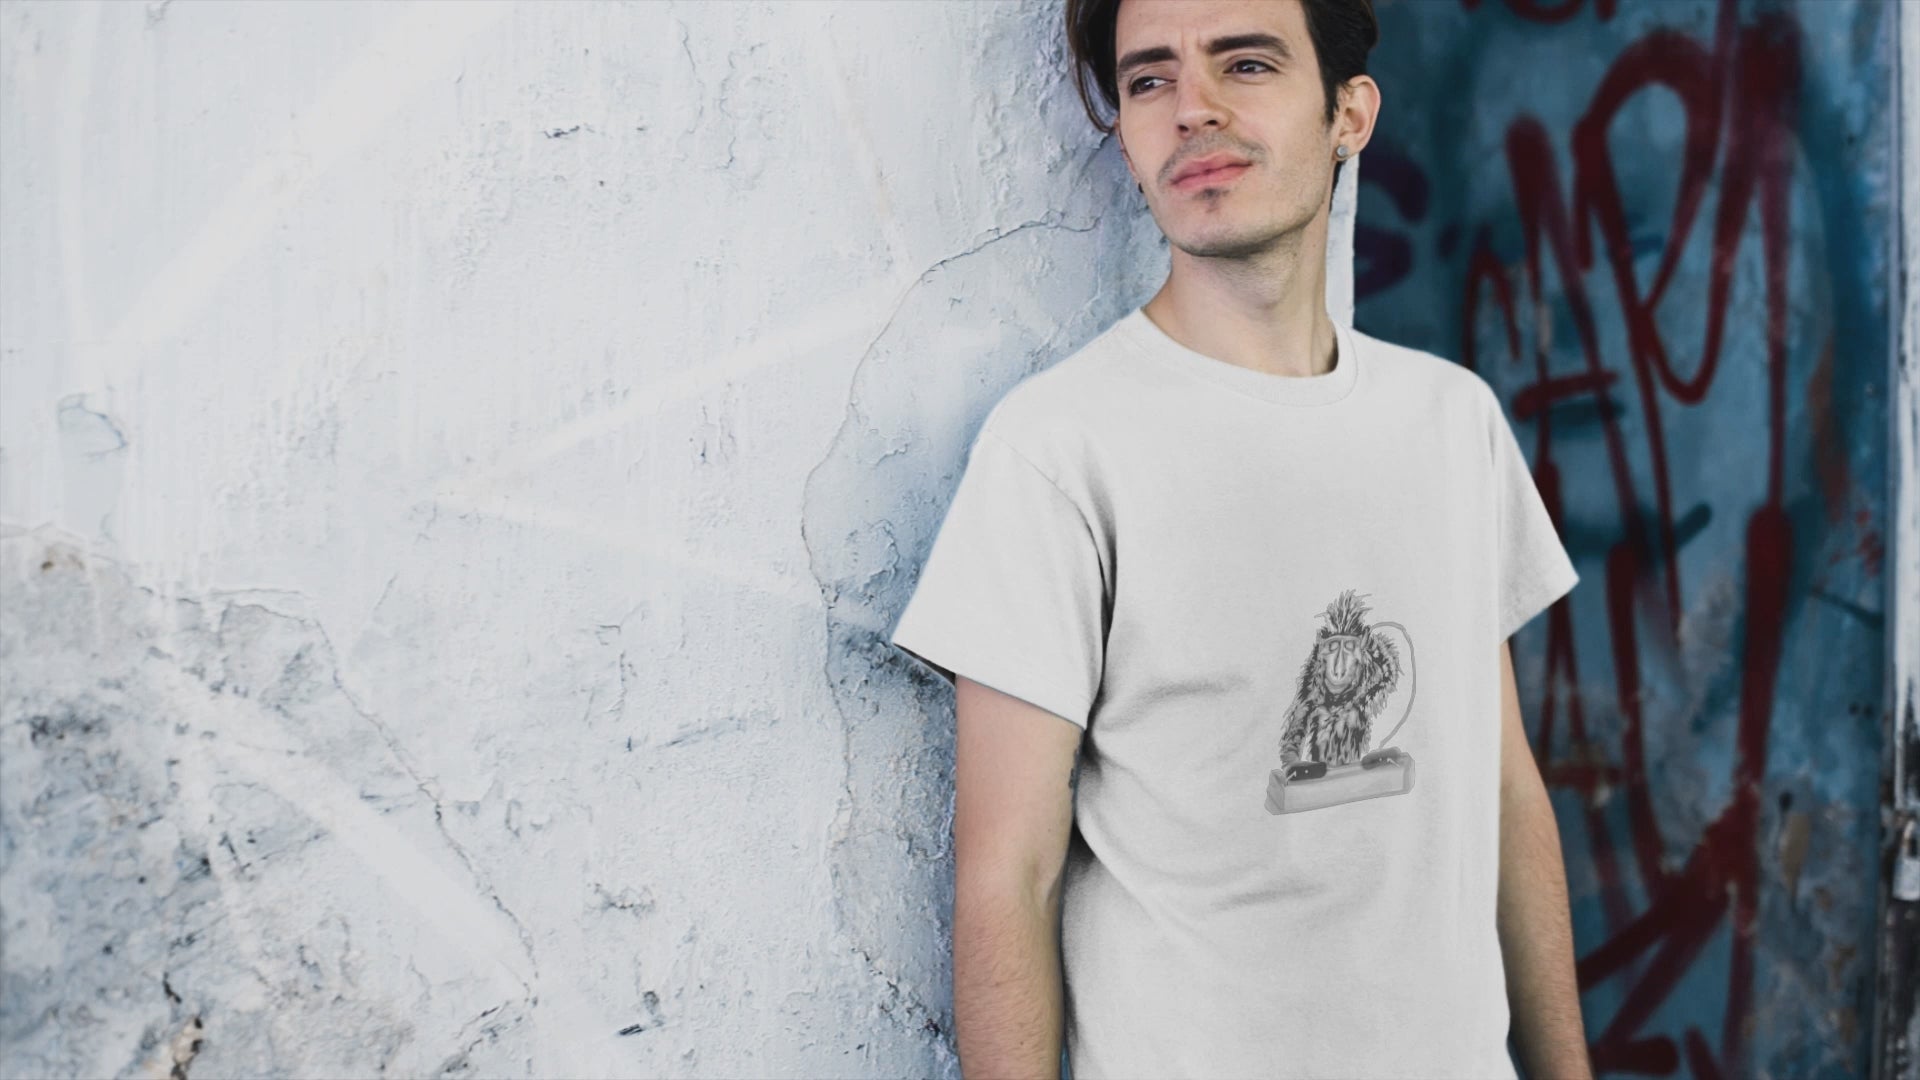 Monkey DJ | 100% Organic Cotton T Shirt worn by a man by a wall